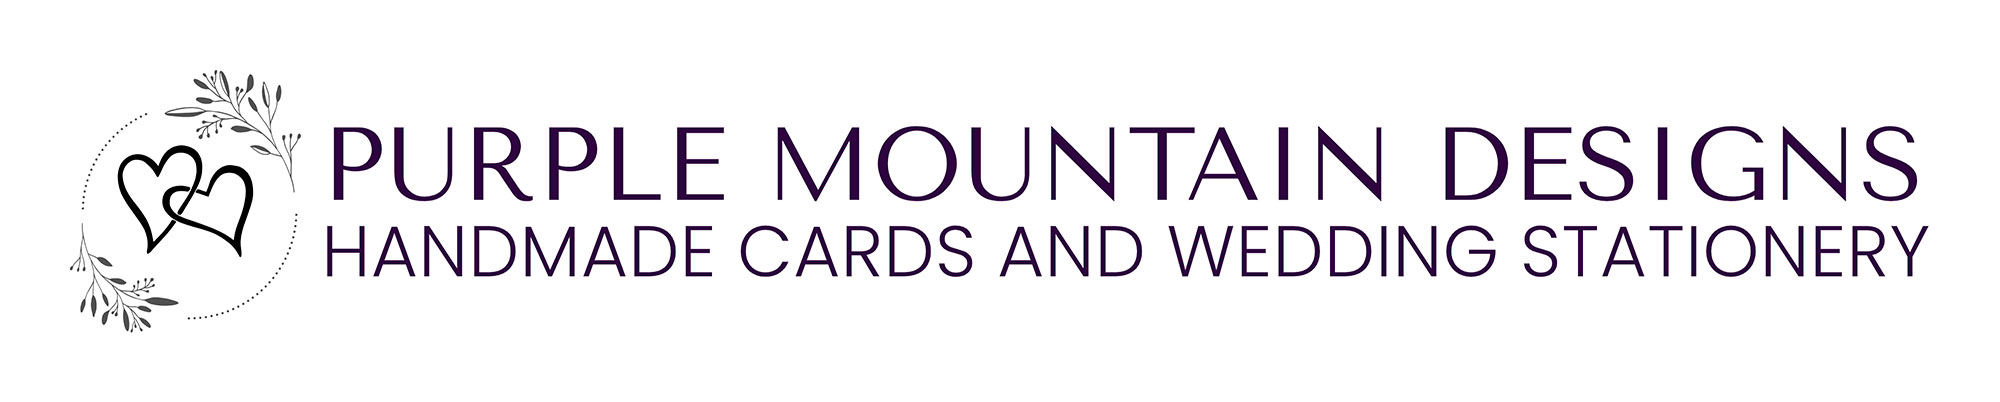 Purple Mountain Designs